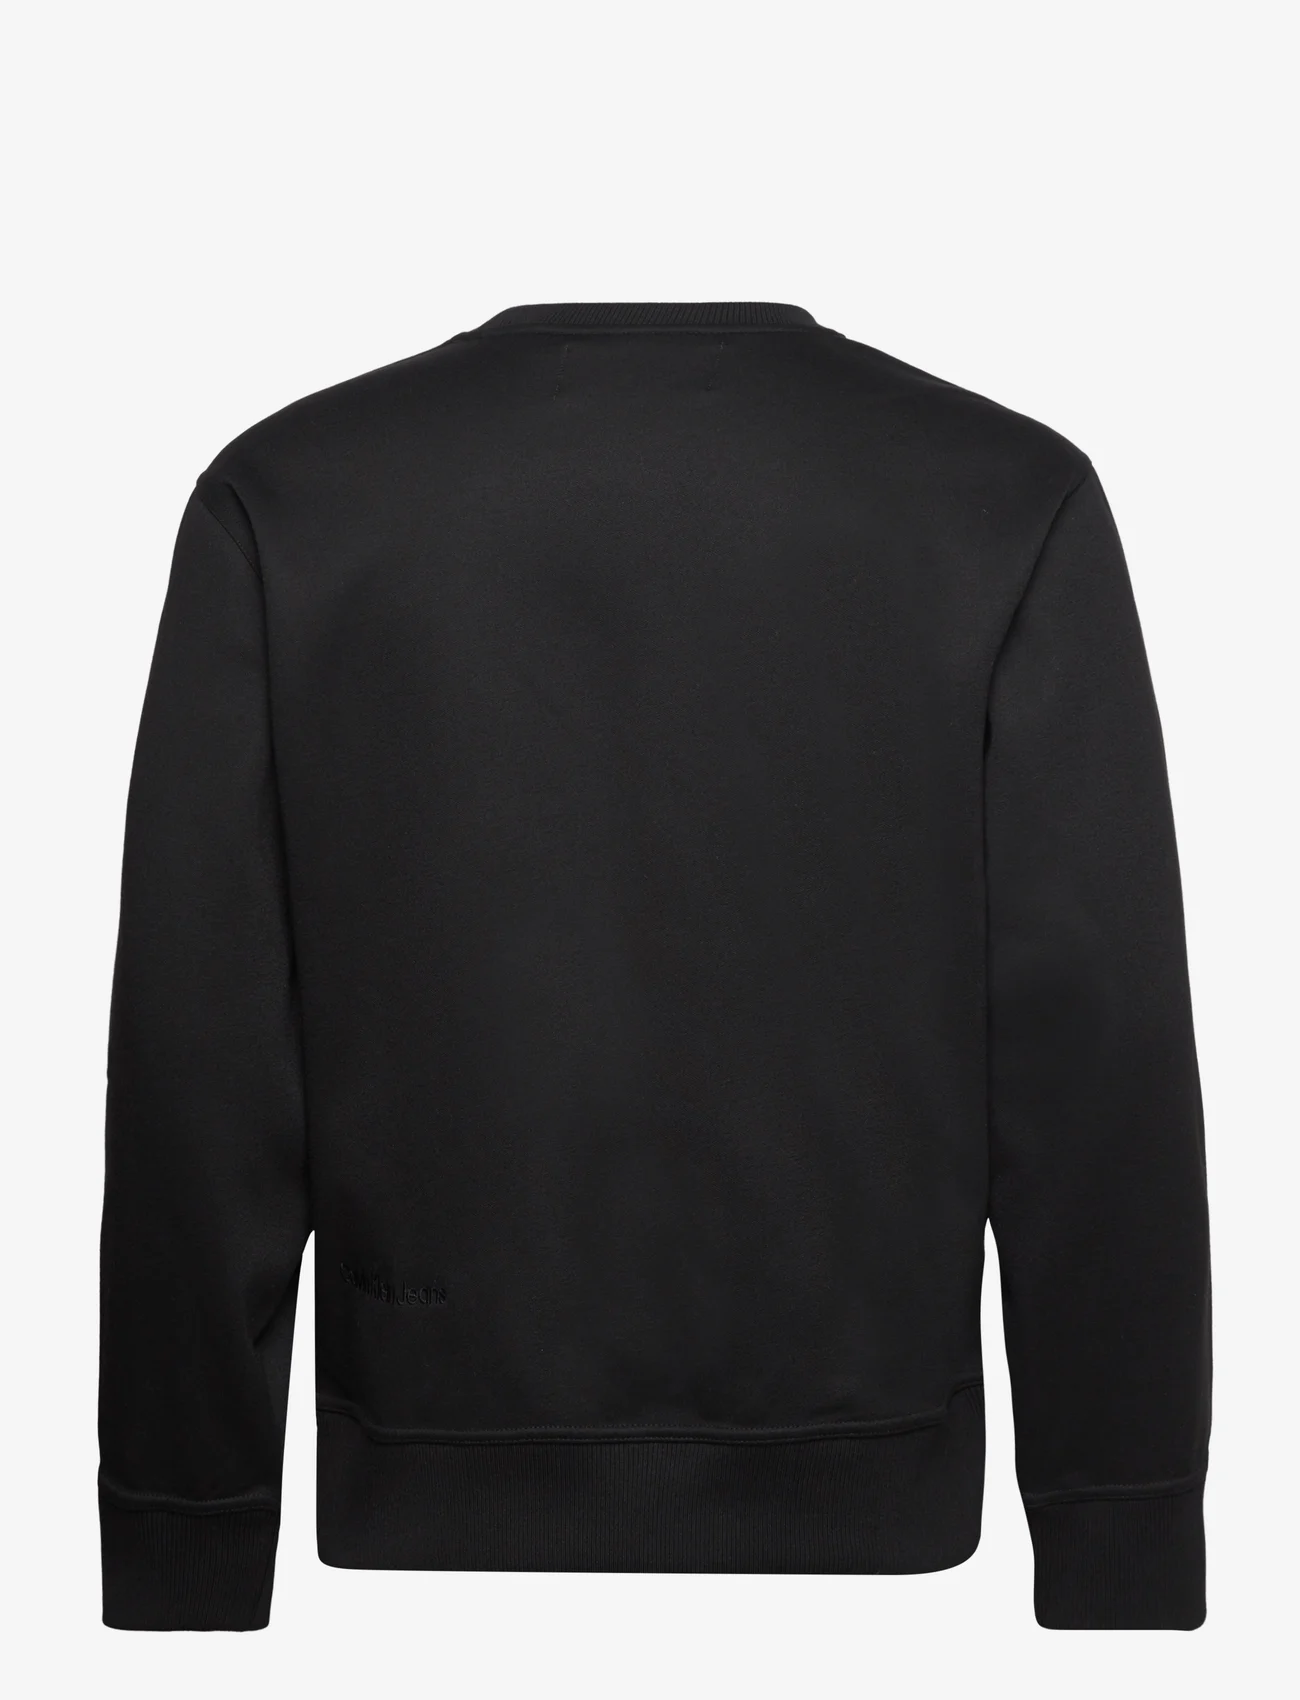 Calvin Klein Jeans - CK CHENILLE CREW NECK - truien en hoodies - ck black - 1